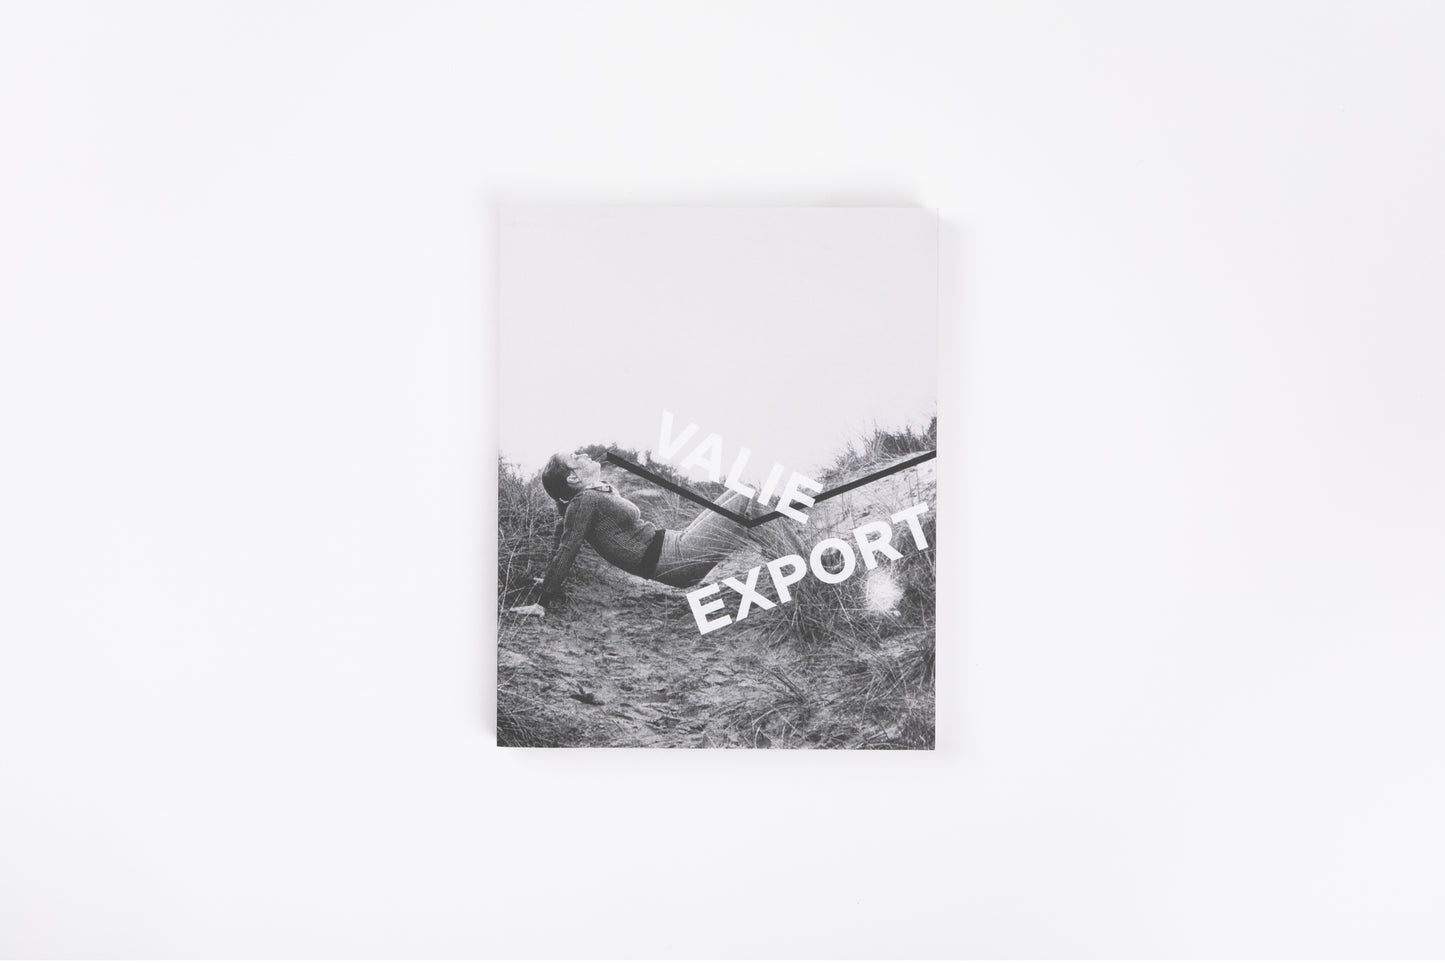 Valie Export: Photography